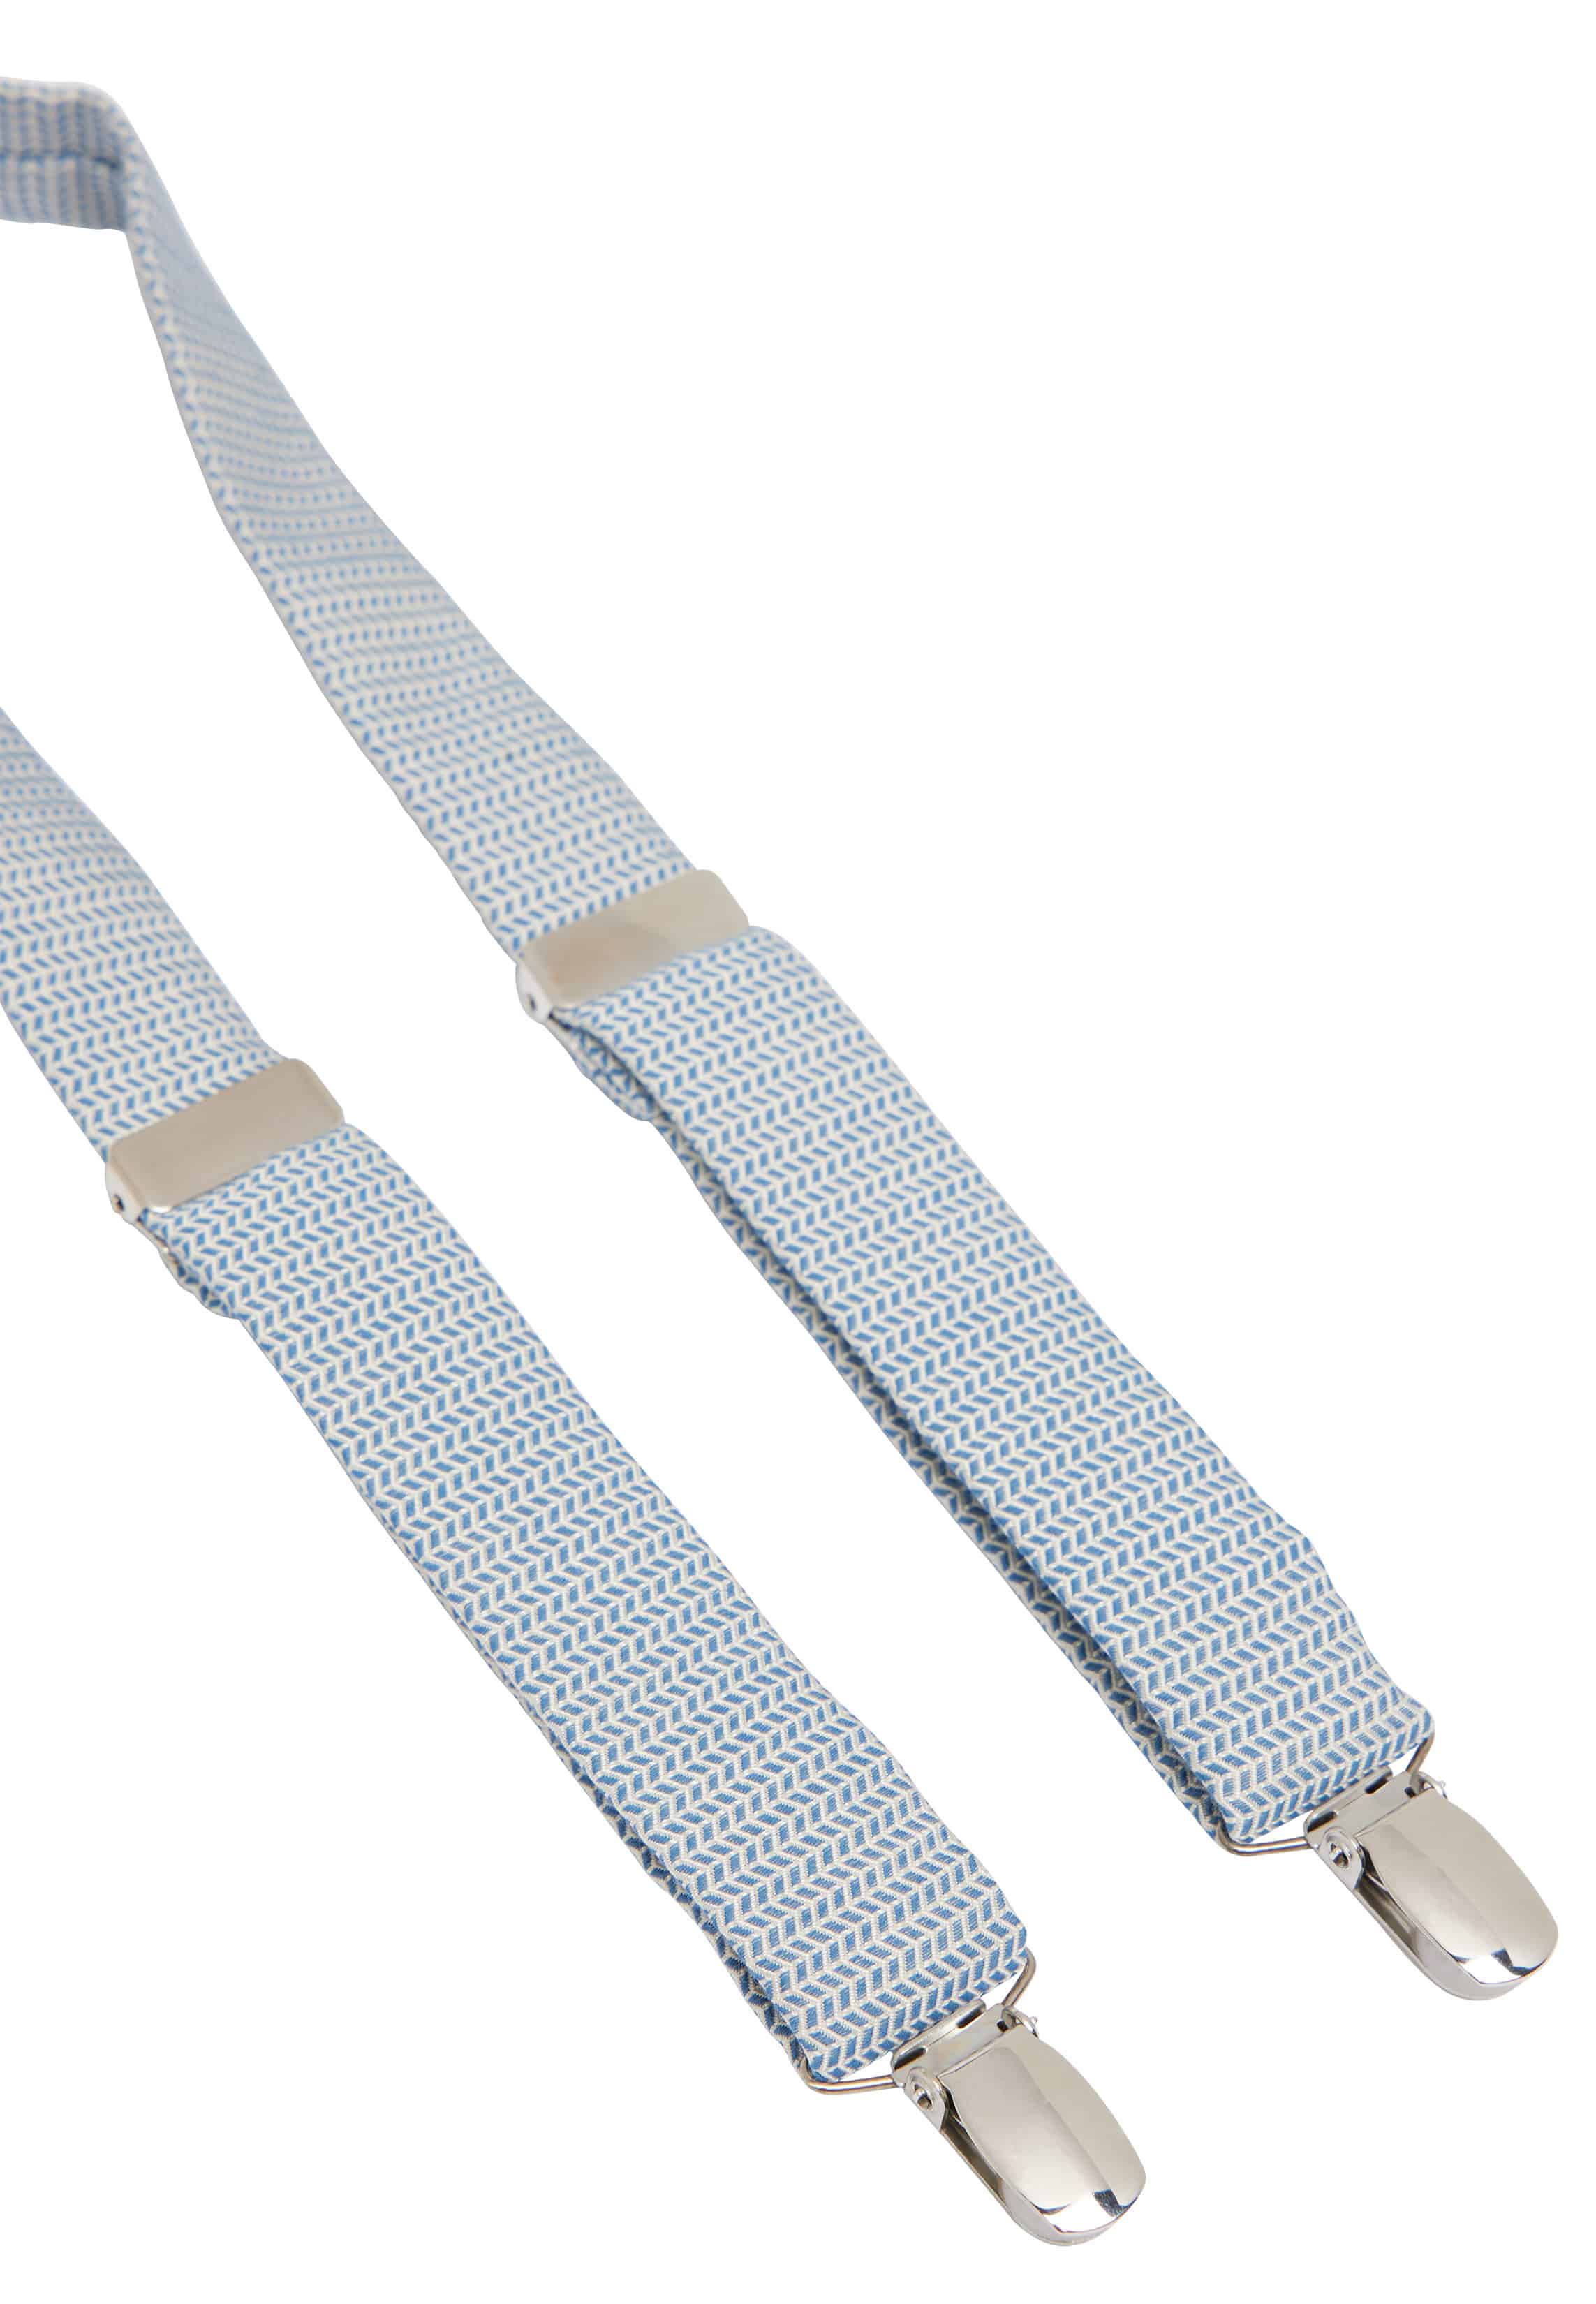 Braces in medium blue patterned